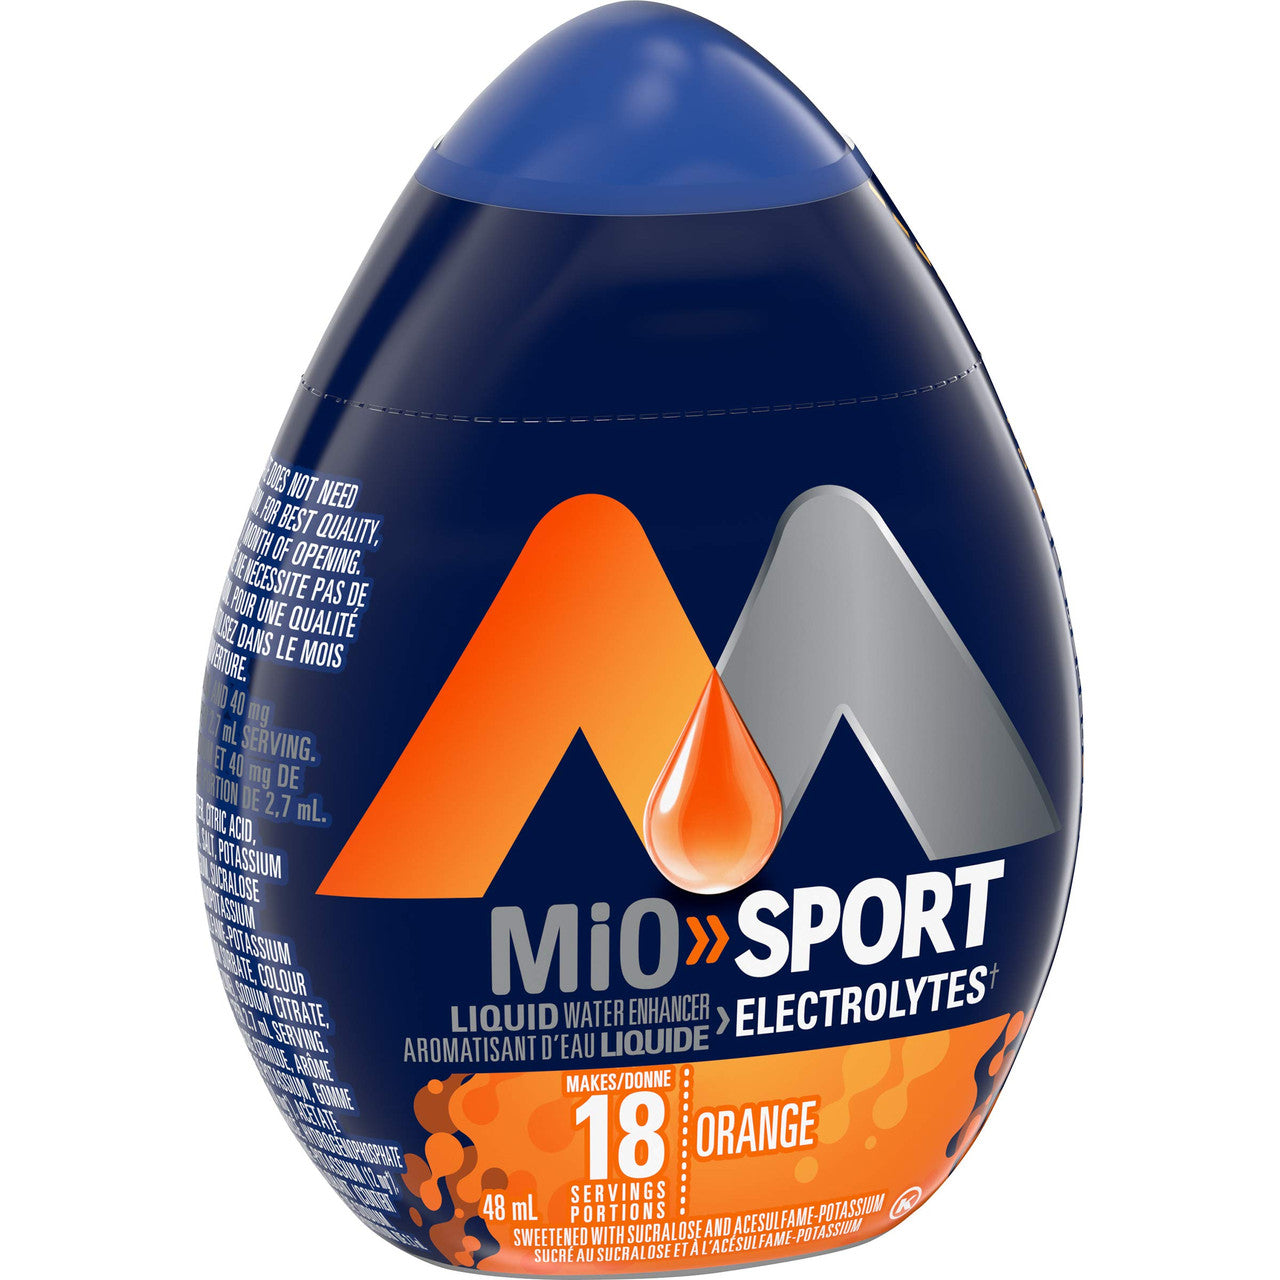 MiO Sport Liquid Water Enhancer, Orange, 48mL/1.6 fl. oz., (Pack of 12) {Imported from Canada}